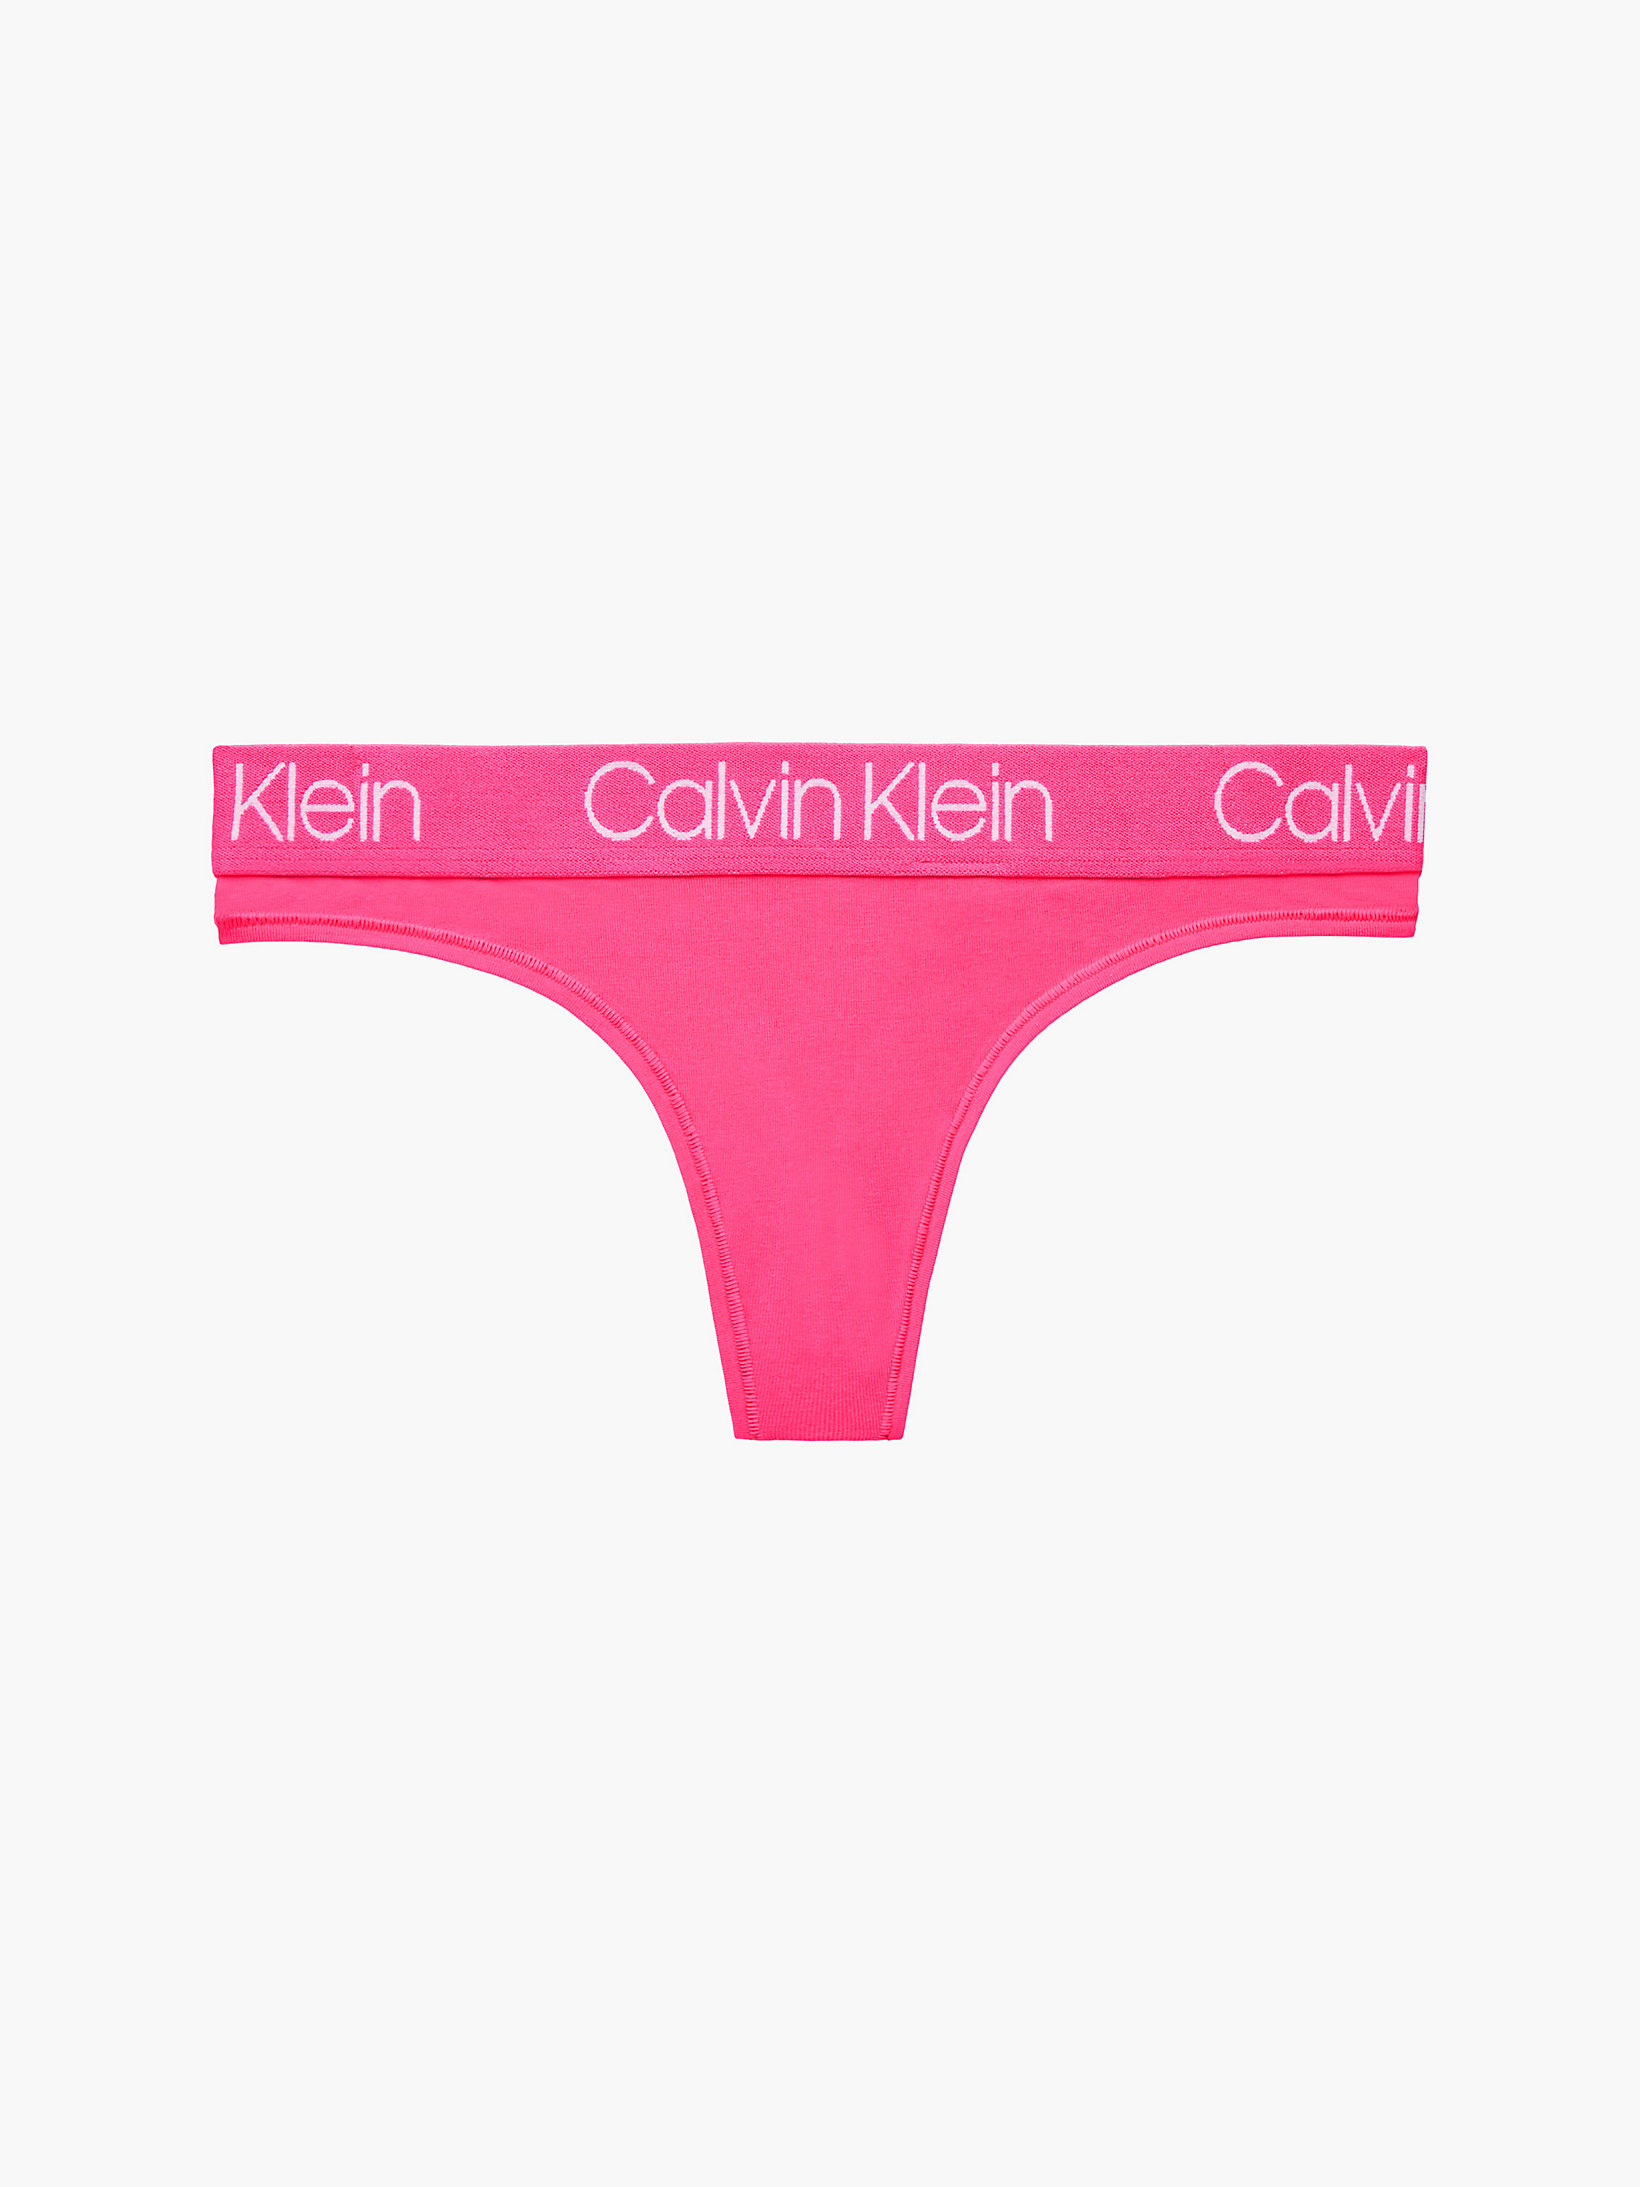 Raspberry Sorbet Thong - Body undefined women Calvin Klein